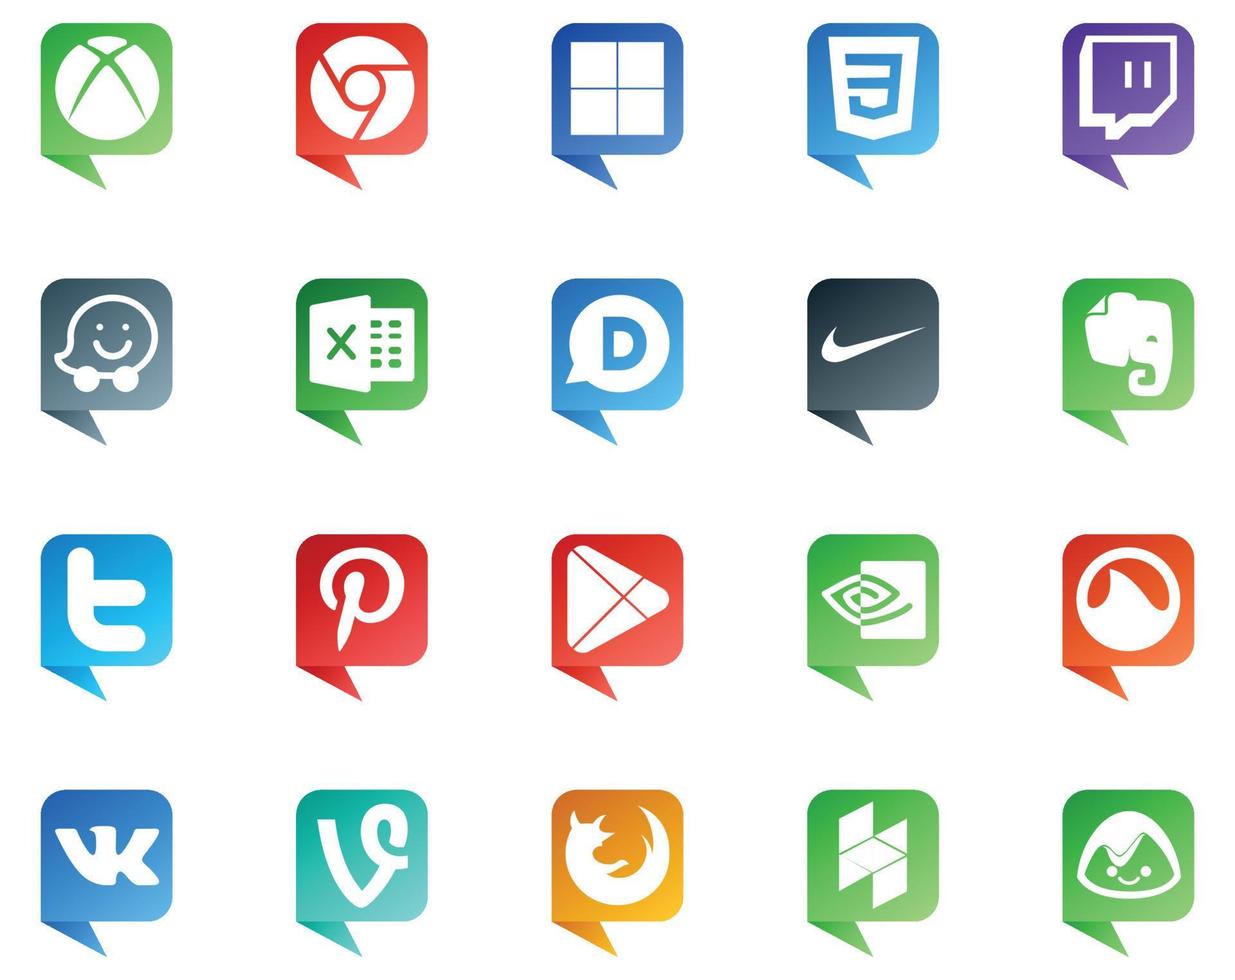 20 sociaal media toespraak bubbel stijl logo Leuk vinden vk nvidia Nike apps pinterest vector